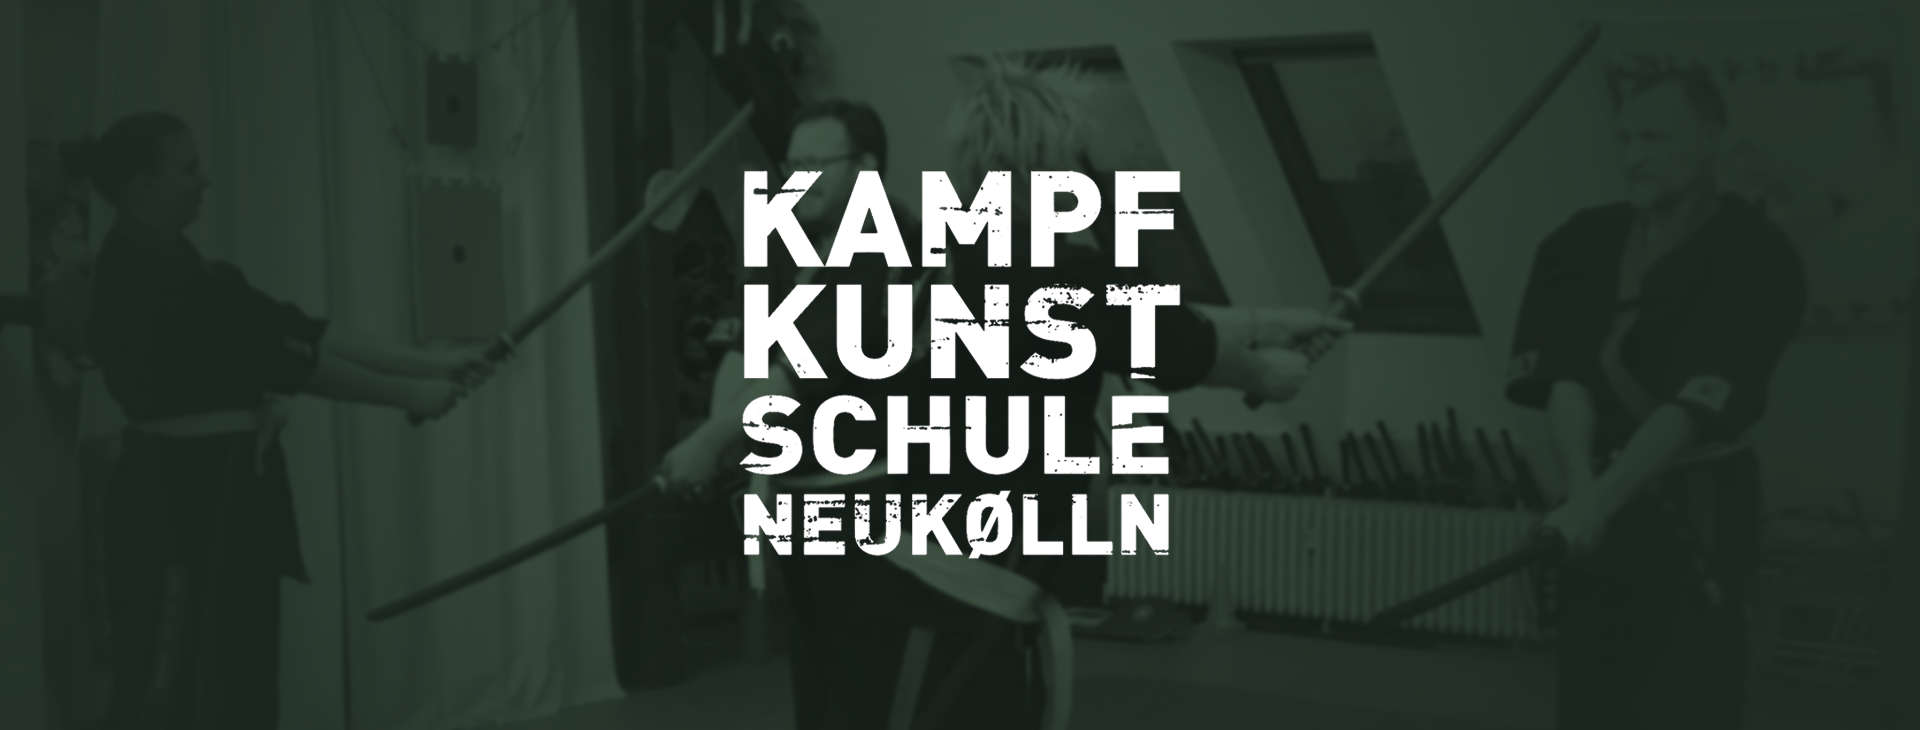 Kampfkunstschule neukoelln kampfkunst kampfsport selbstverteidigung berlin BANNER